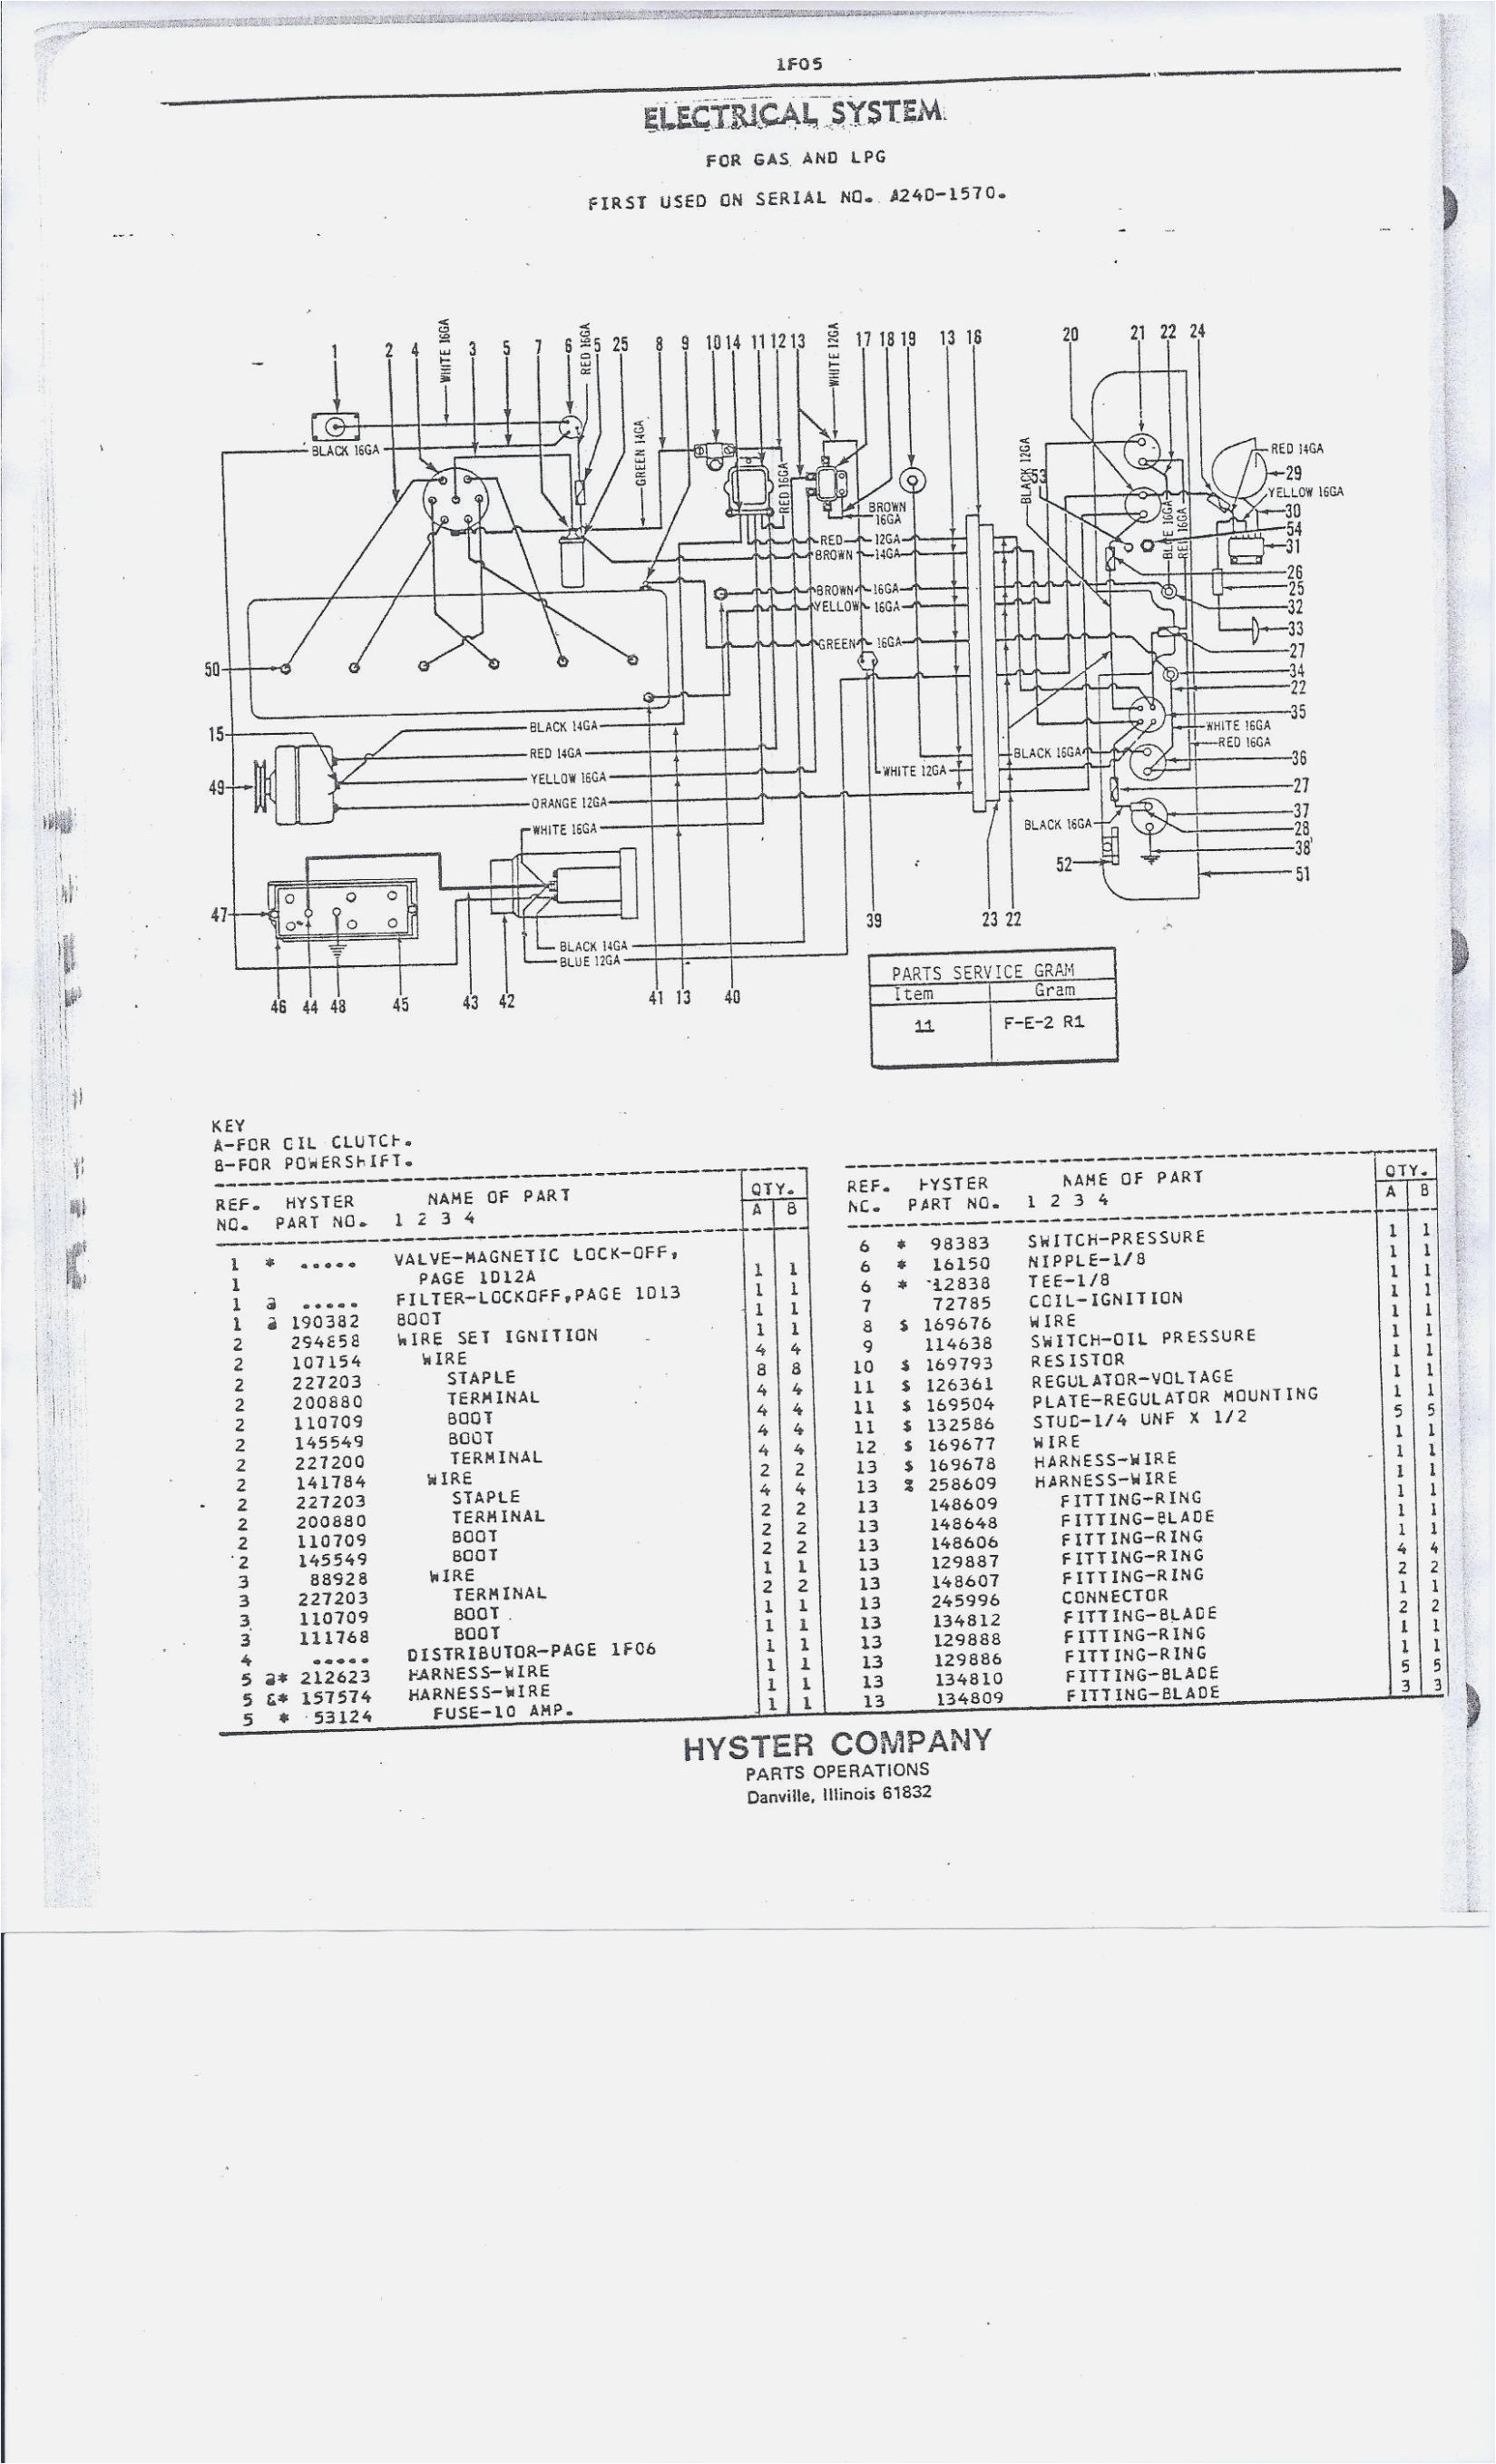 hyster 100 wiring diagram wiring diagram name hyster wiring diagram hyster wiring diagram